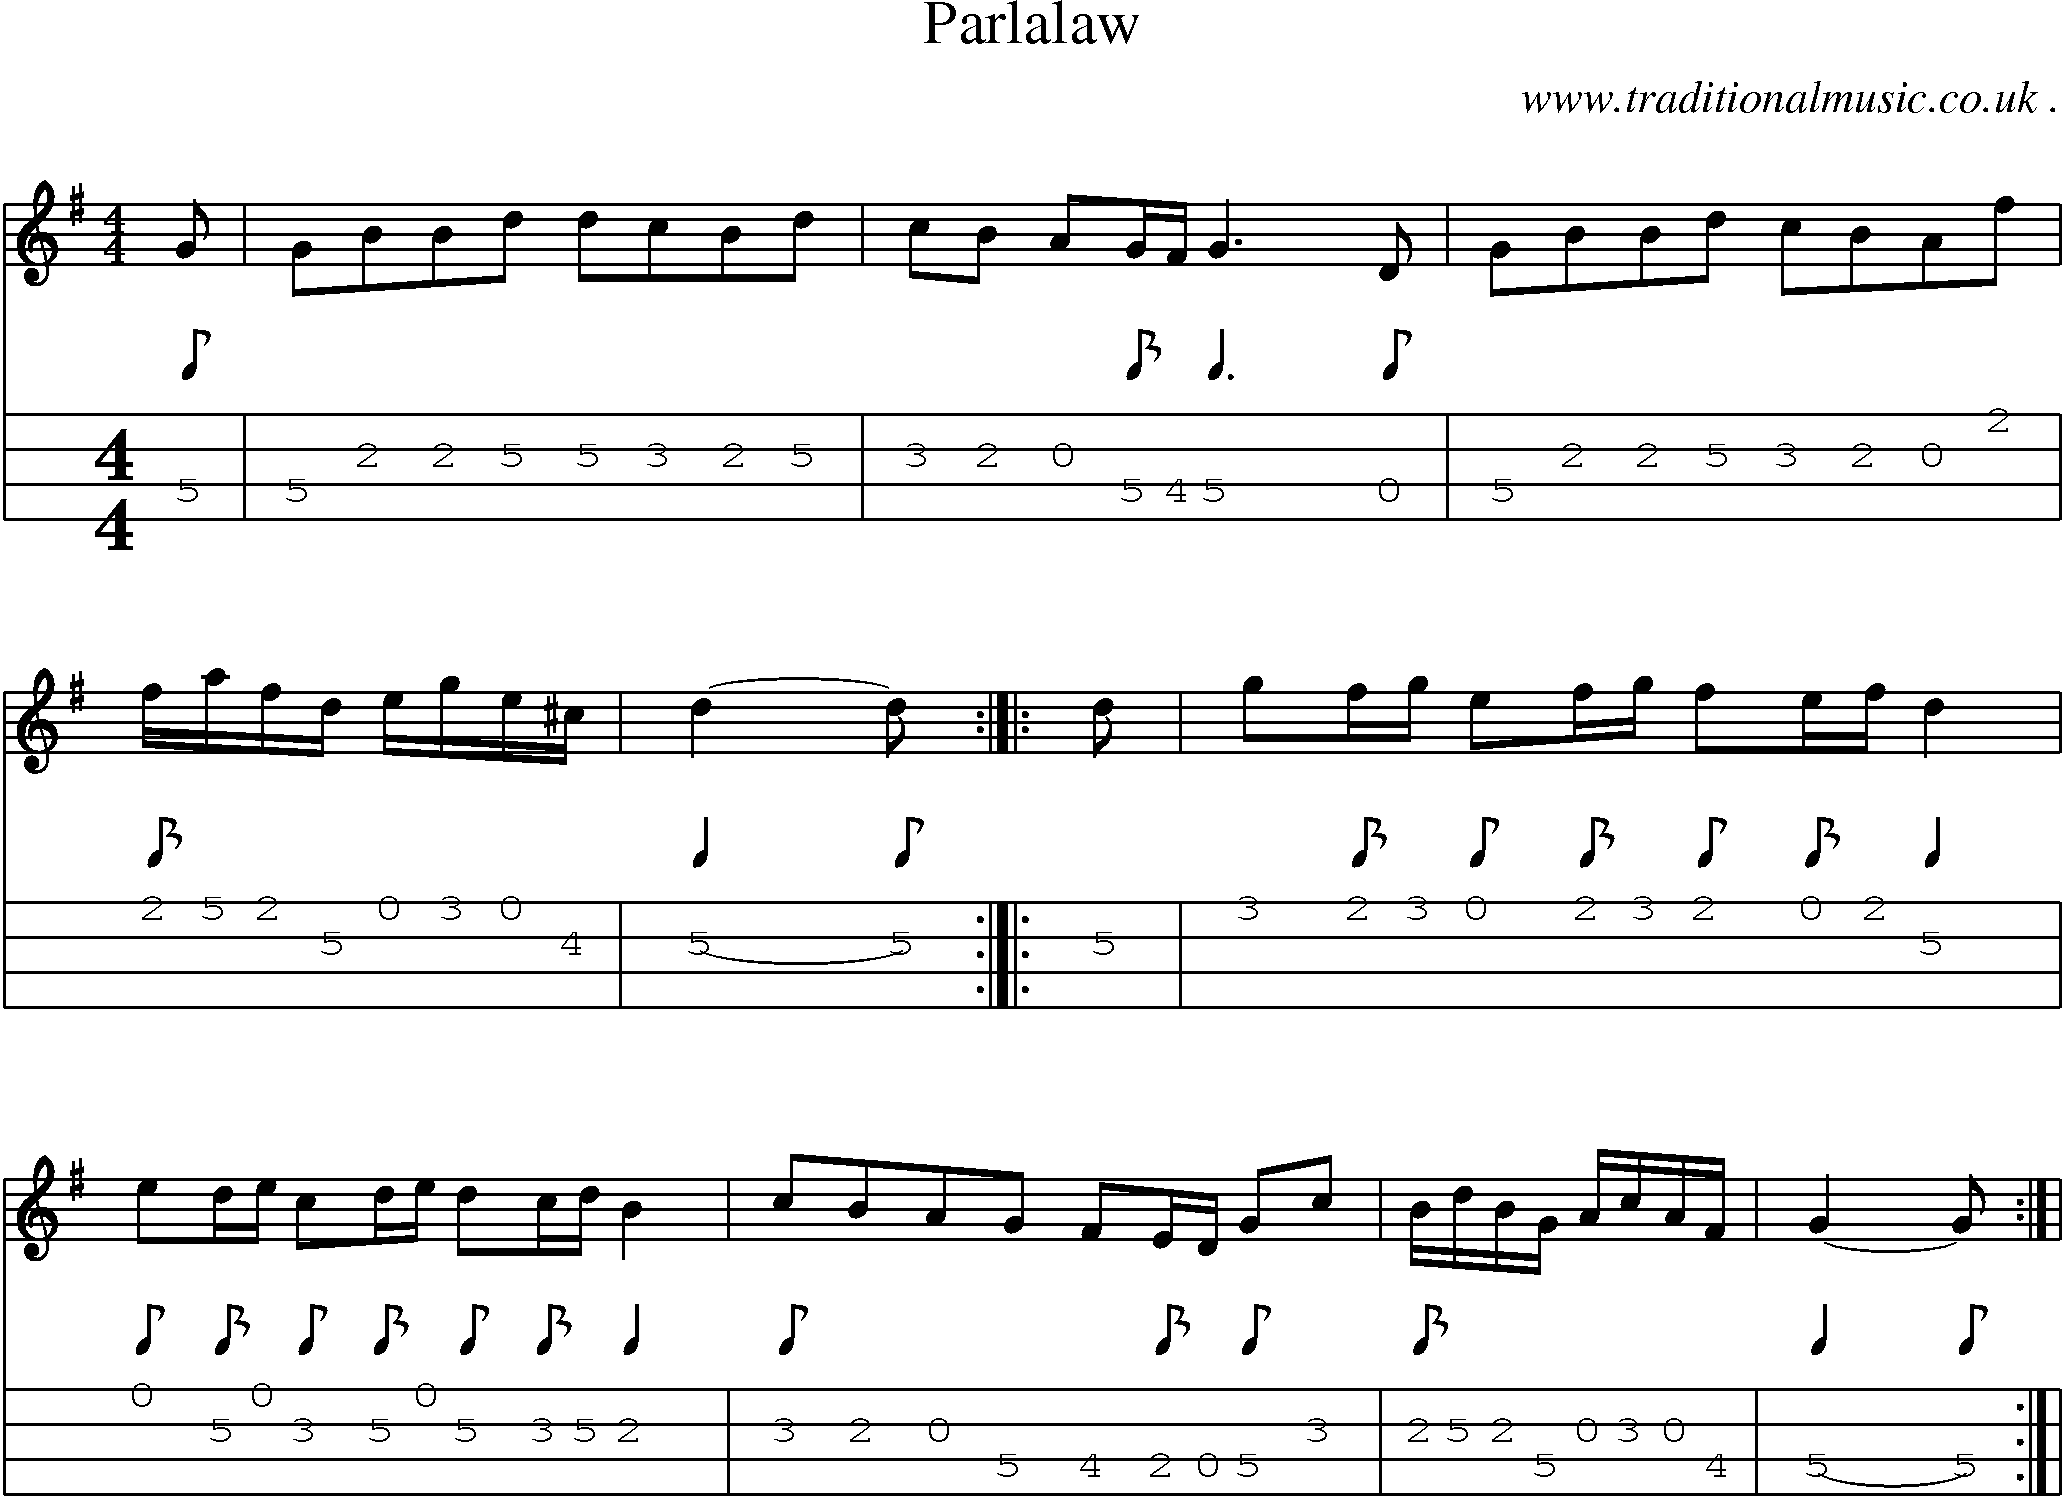 Sheet-Music and Mandolin Tabs for Parlalaw